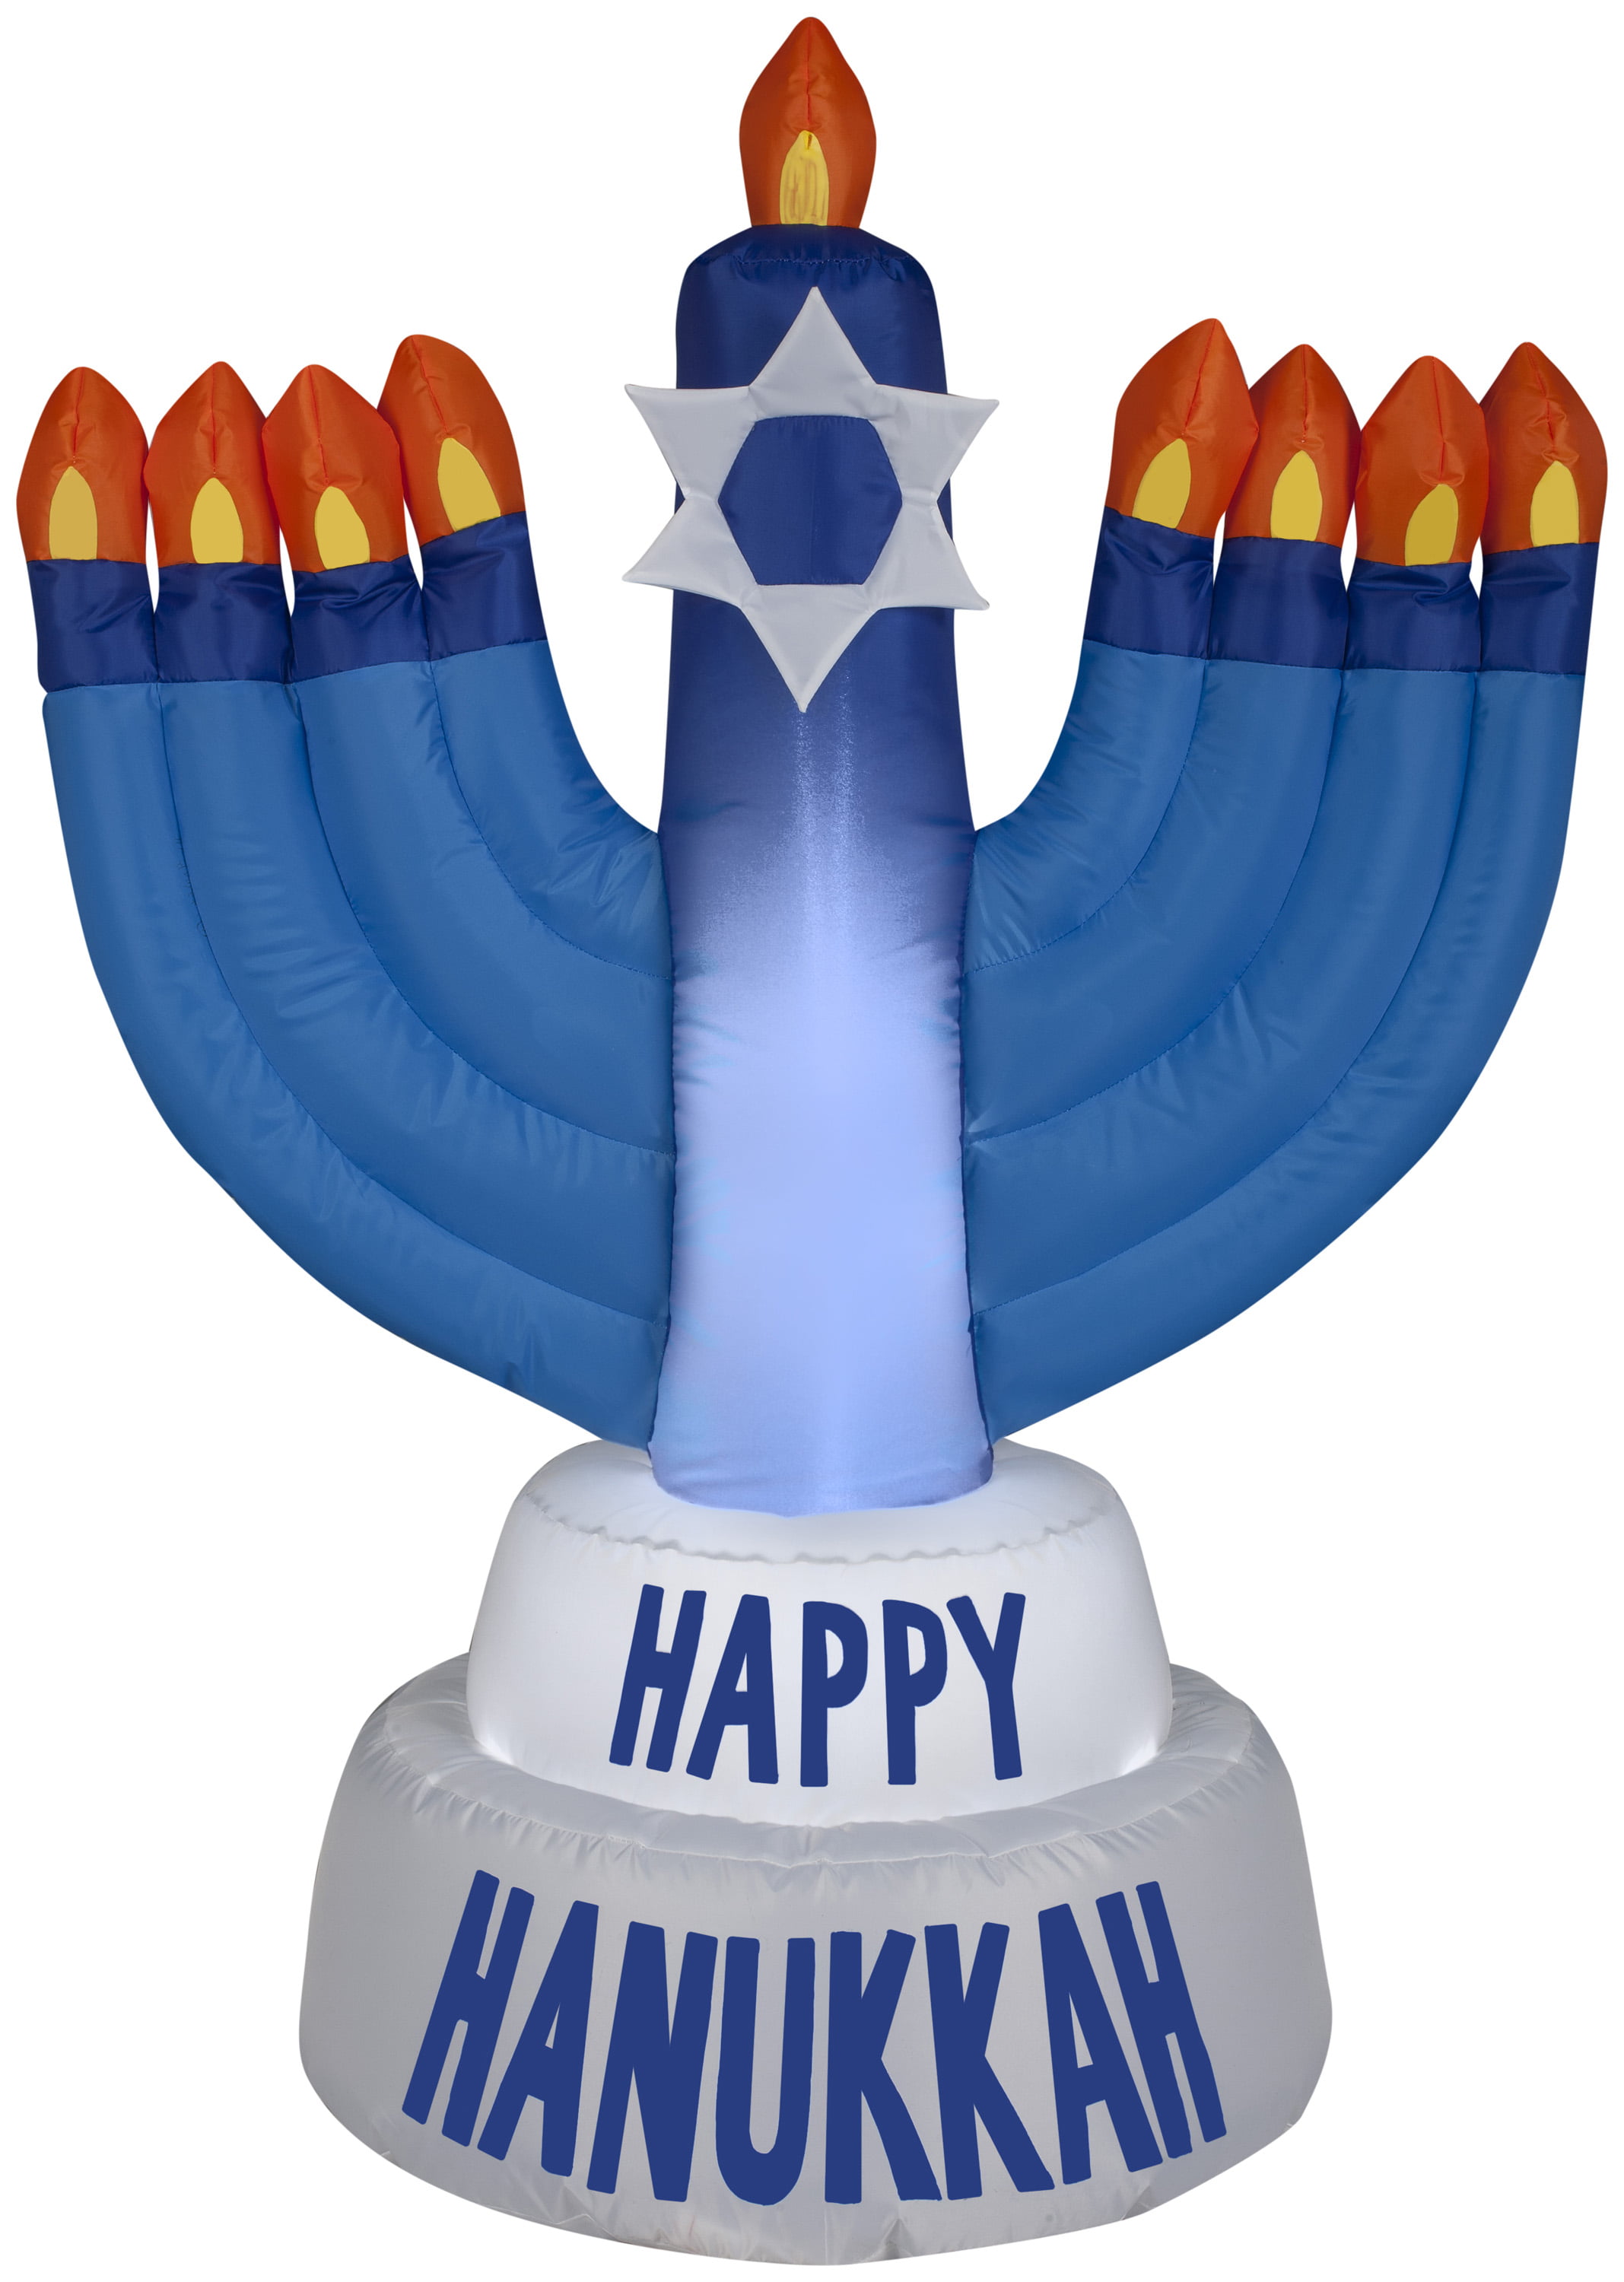 Hanukkah Candles Airblown Inflatables